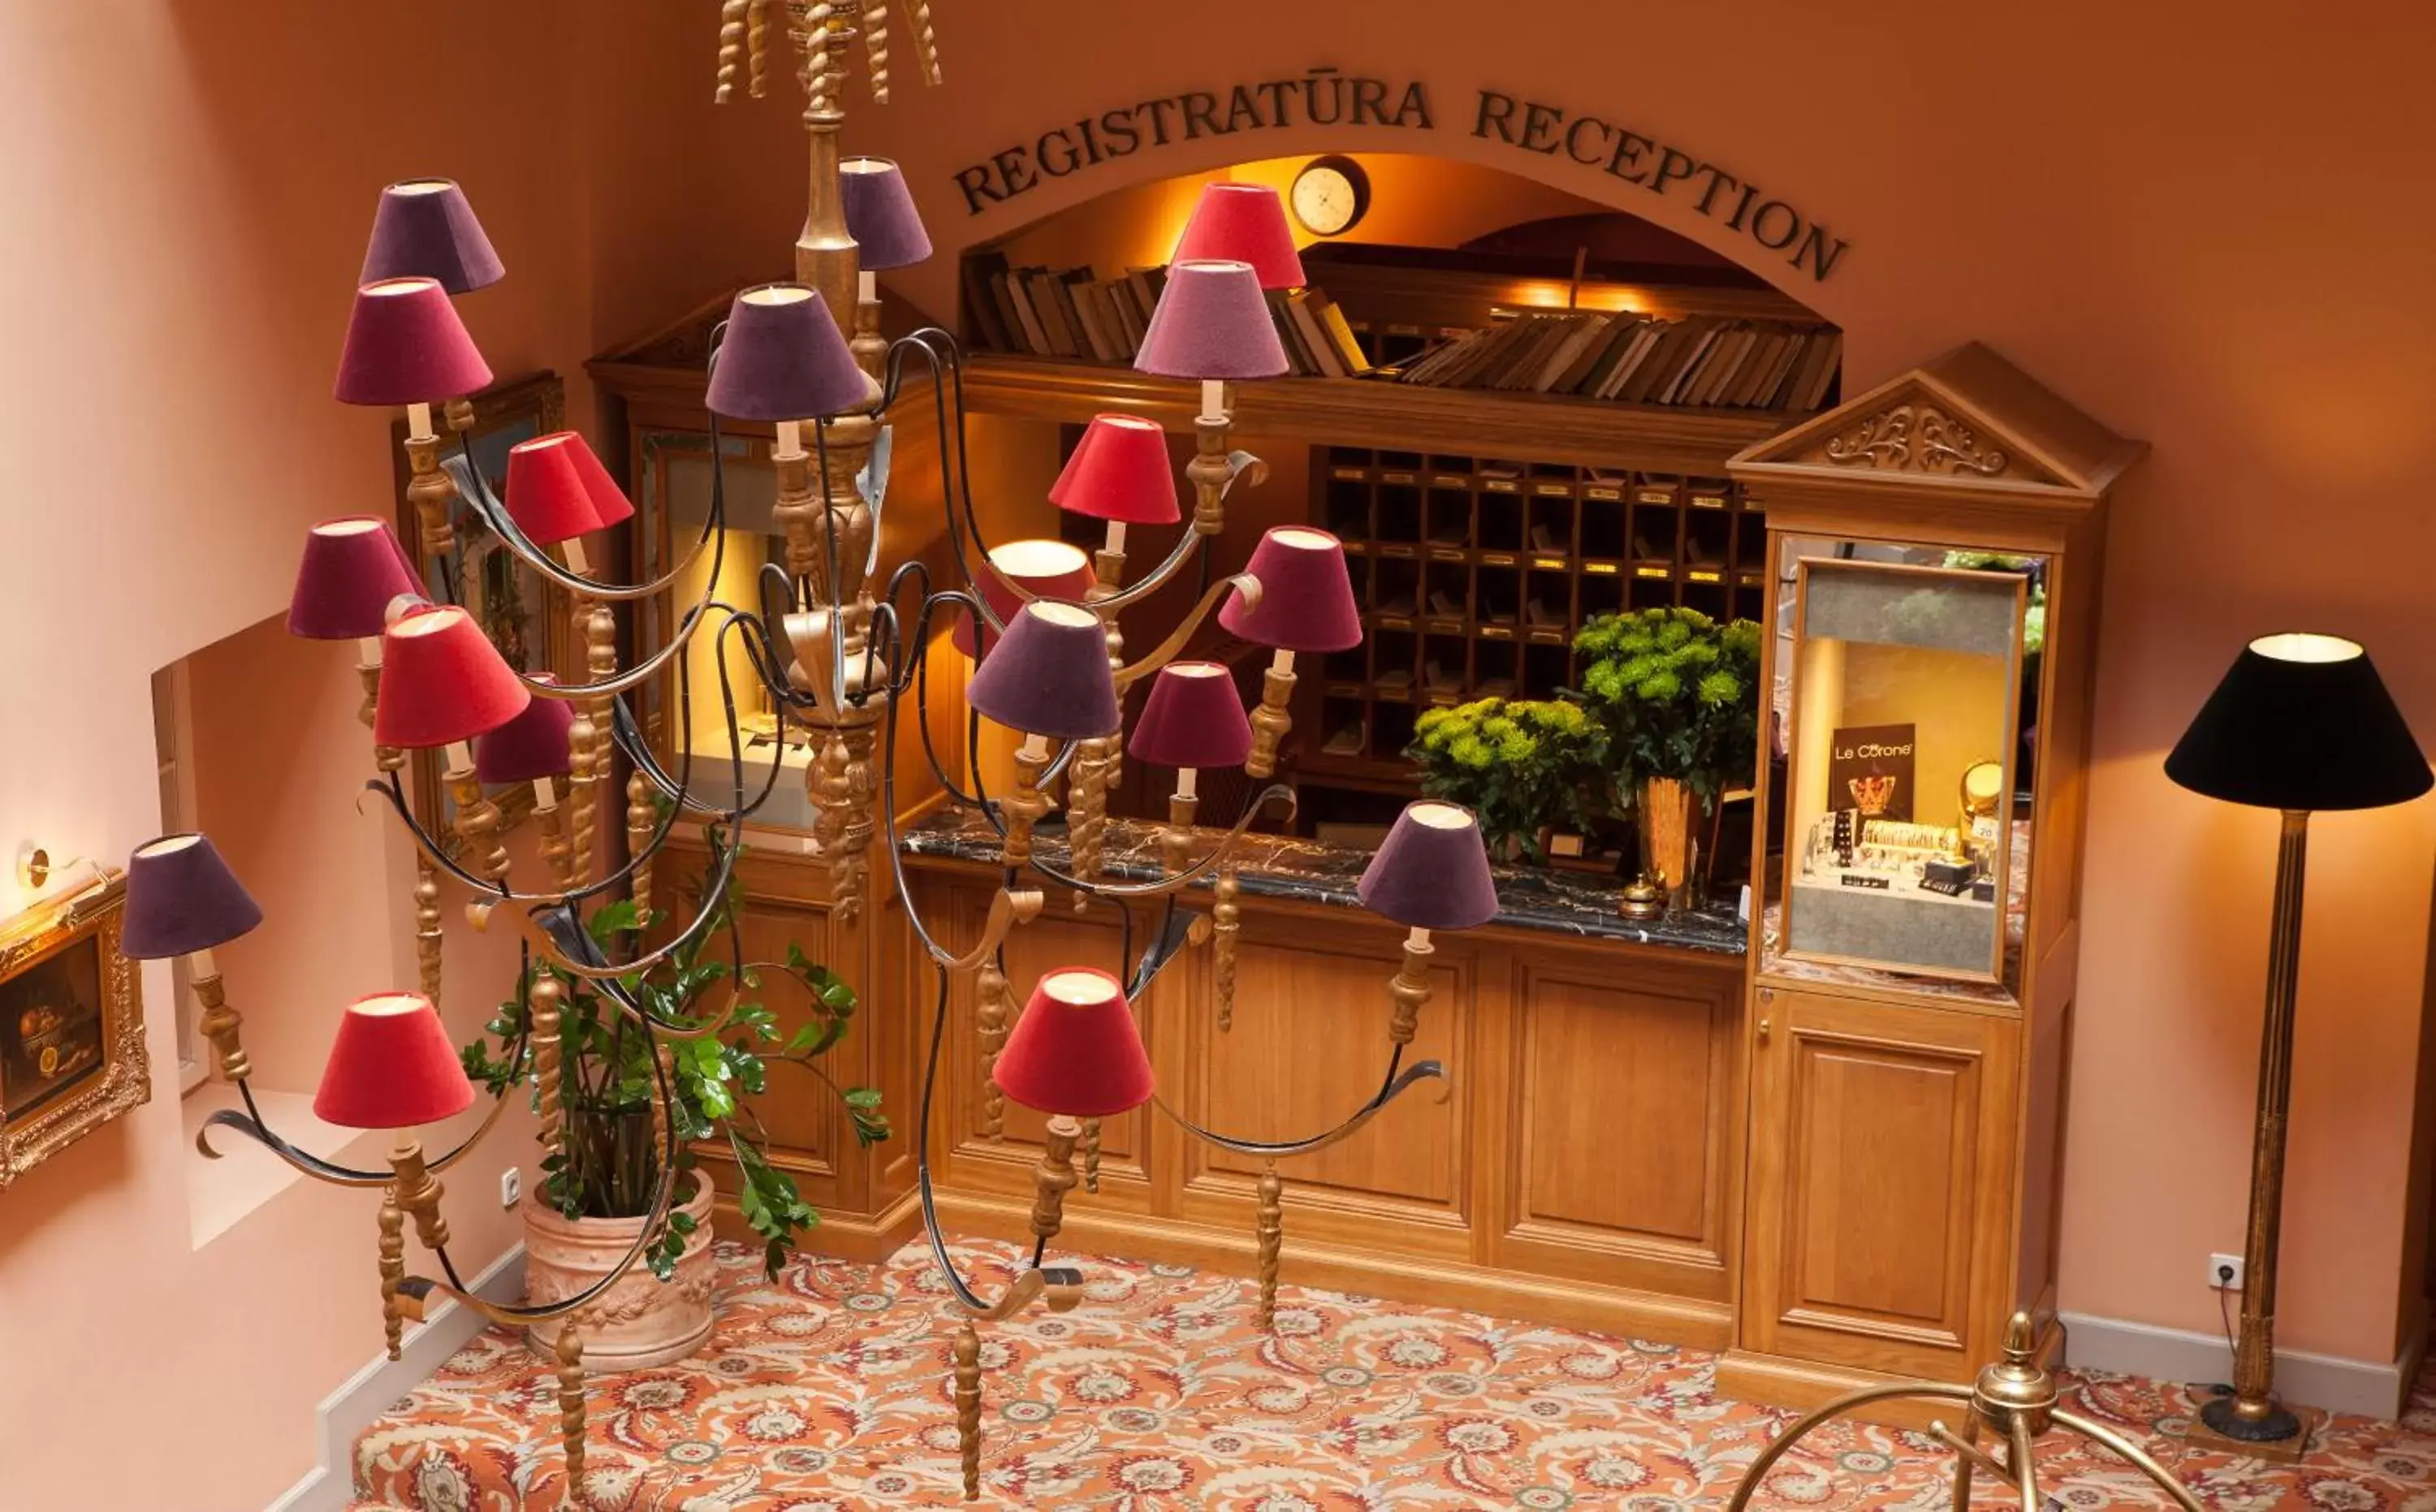 Lobby or reception in NARUTIS hotel